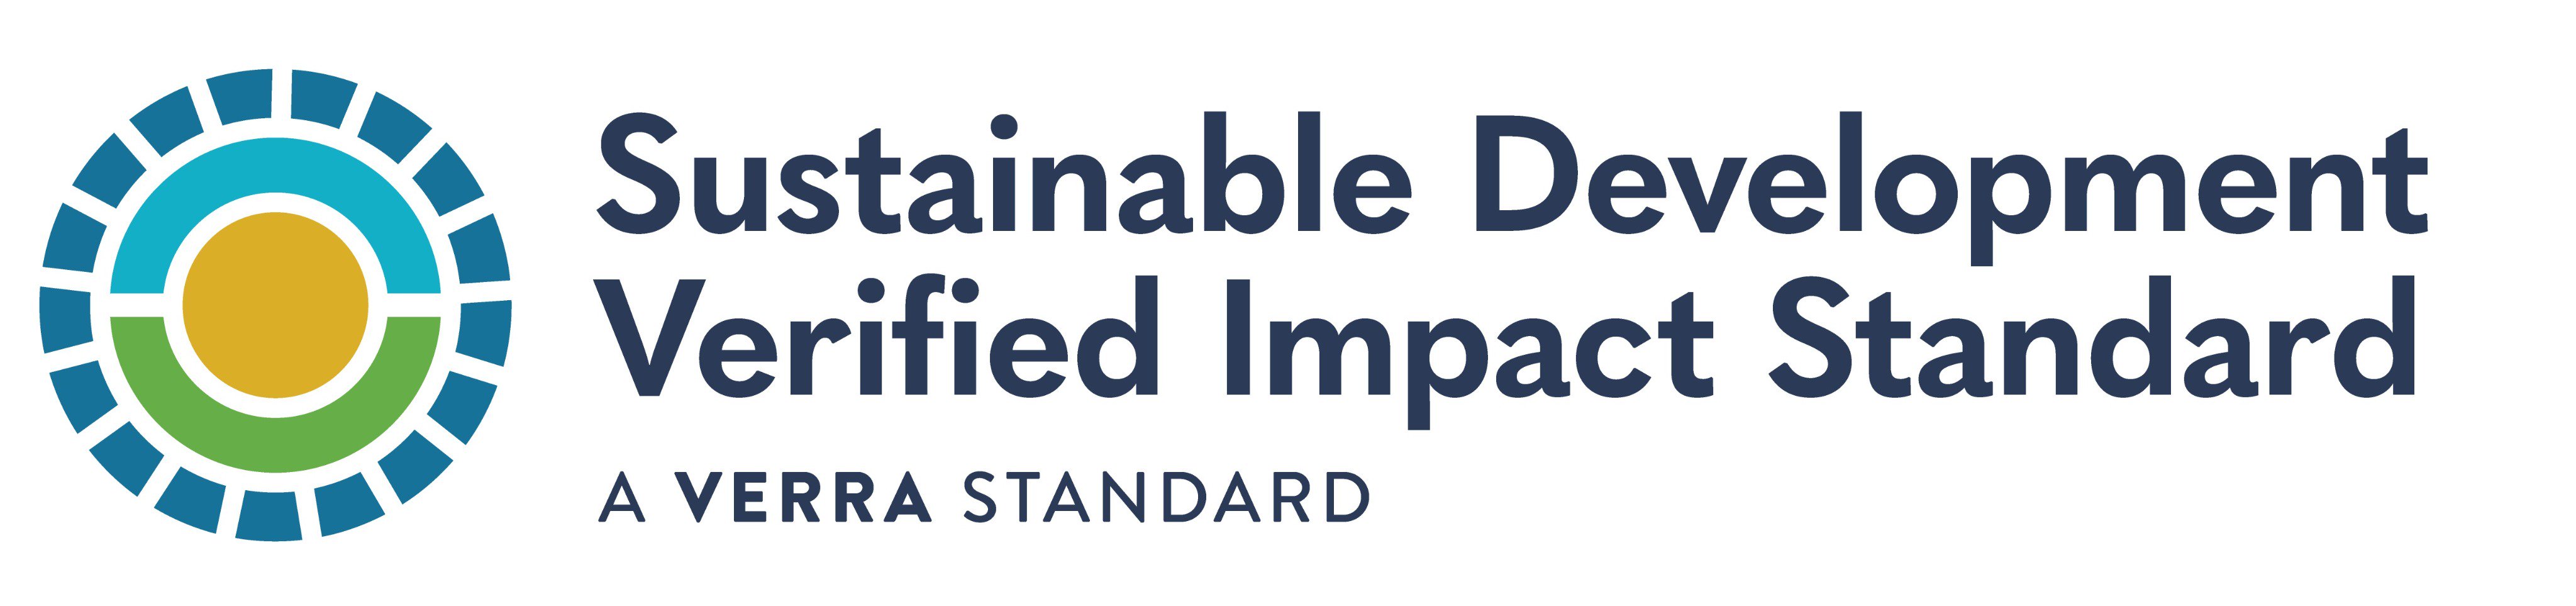 Sustainable Development Verified Impact Standard Logo